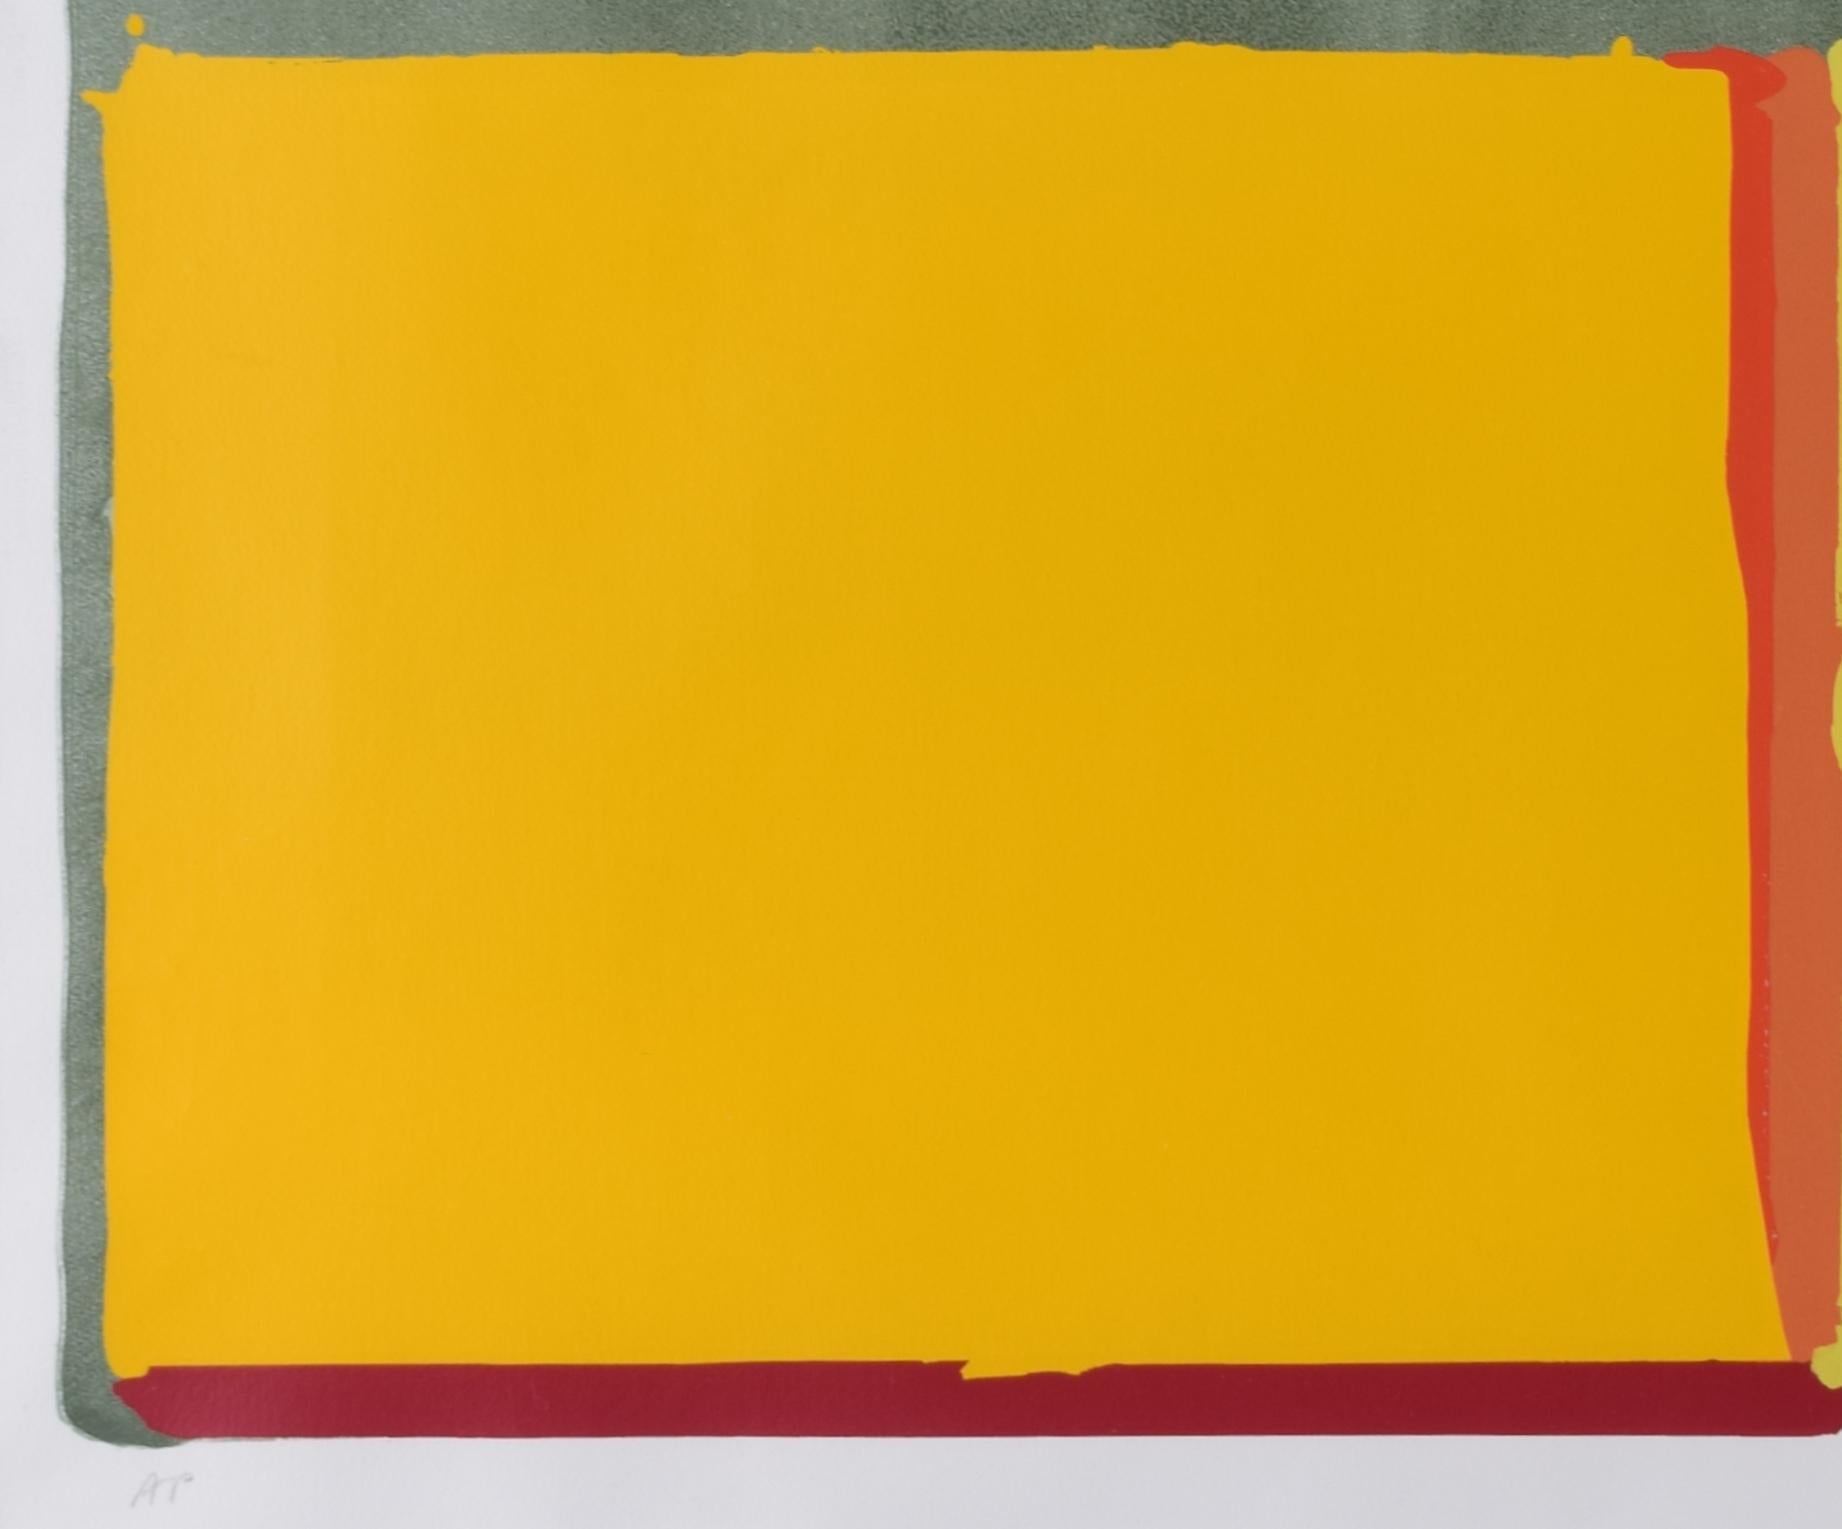 Yellows abstract screenprint by John Hoyland 1960s Modern British Art For Sale 1